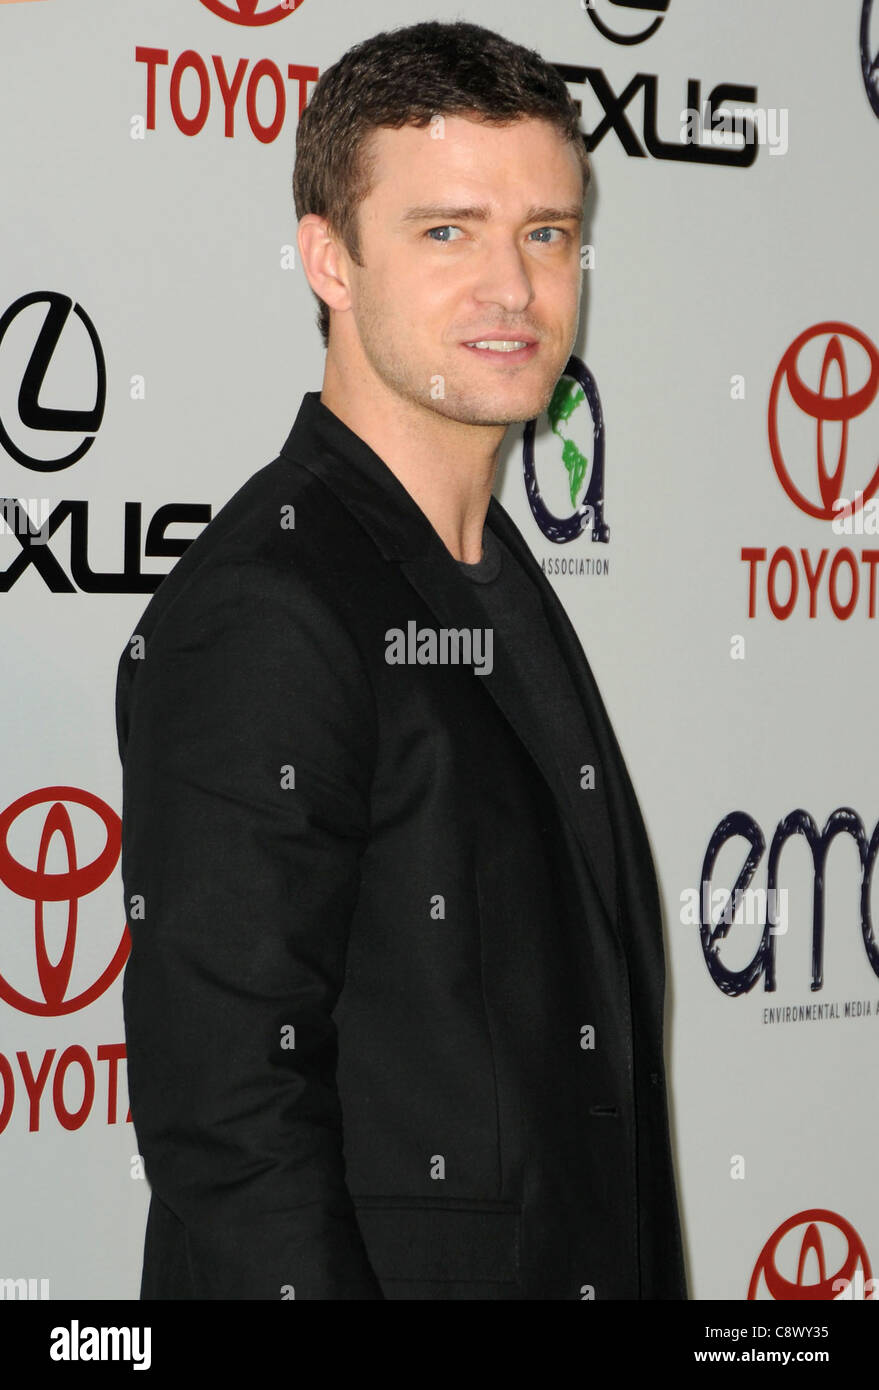 Justin Timberlake at arrivals for 2011 Environmental Media Awards, Warner Bros. Studios, Burbank, CA October 15, 2011. Photo Stock Photo